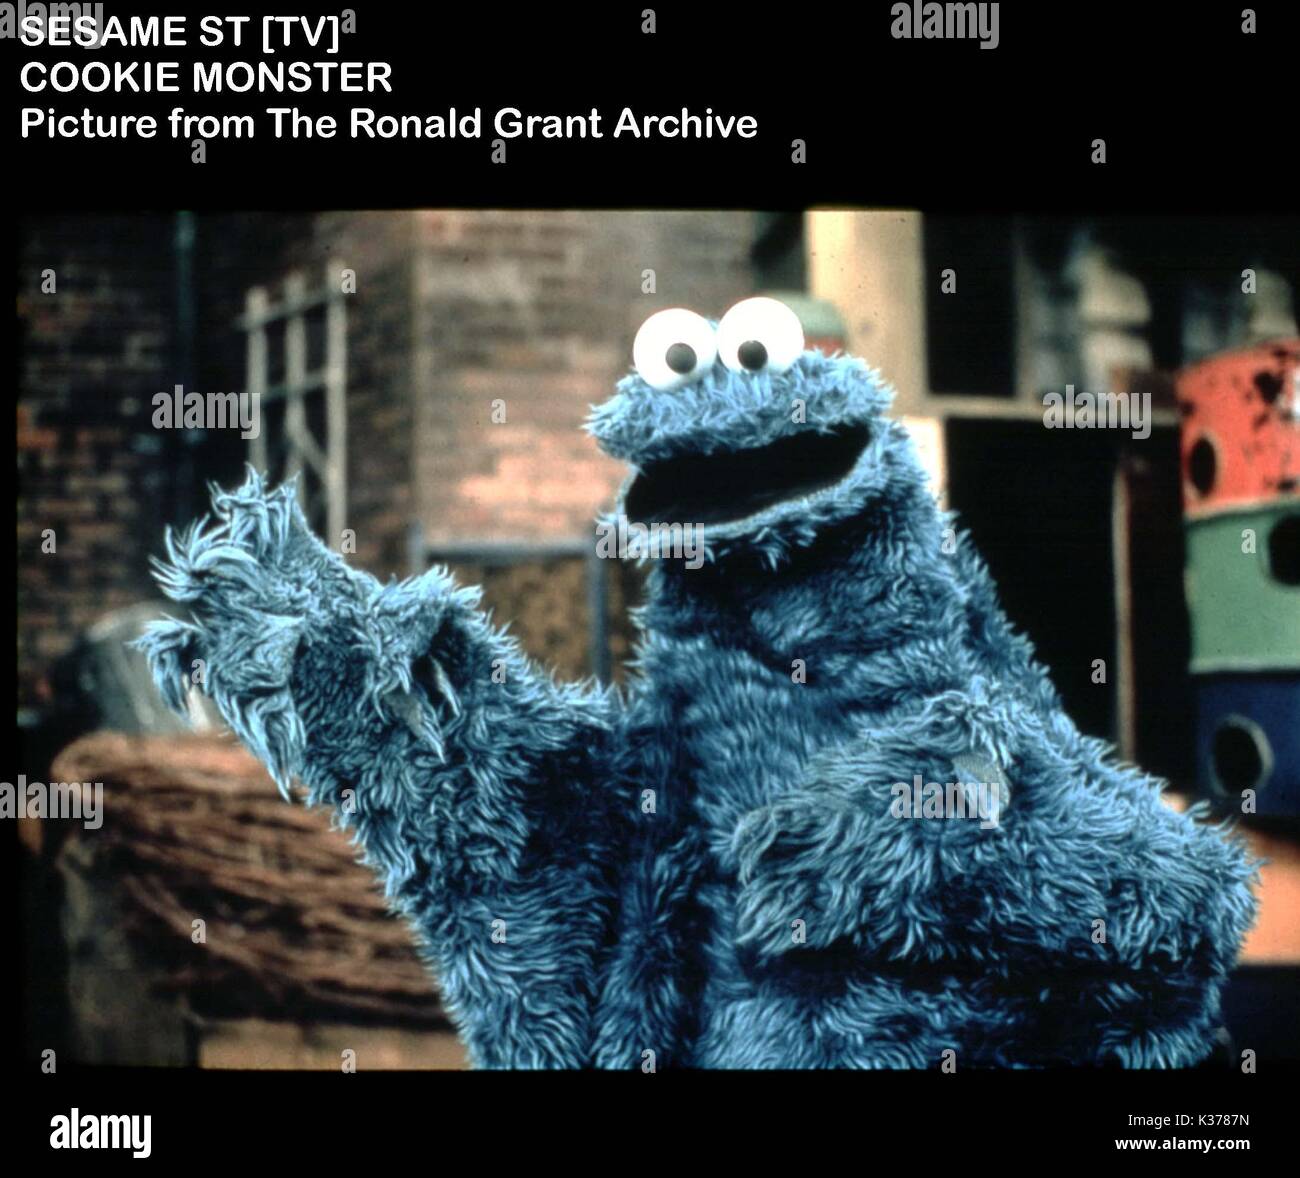 el monstruo de las galletas fondo - Buscar con Google  Cookie monster  pictures, Monster cookies, Sesame street cookie monster